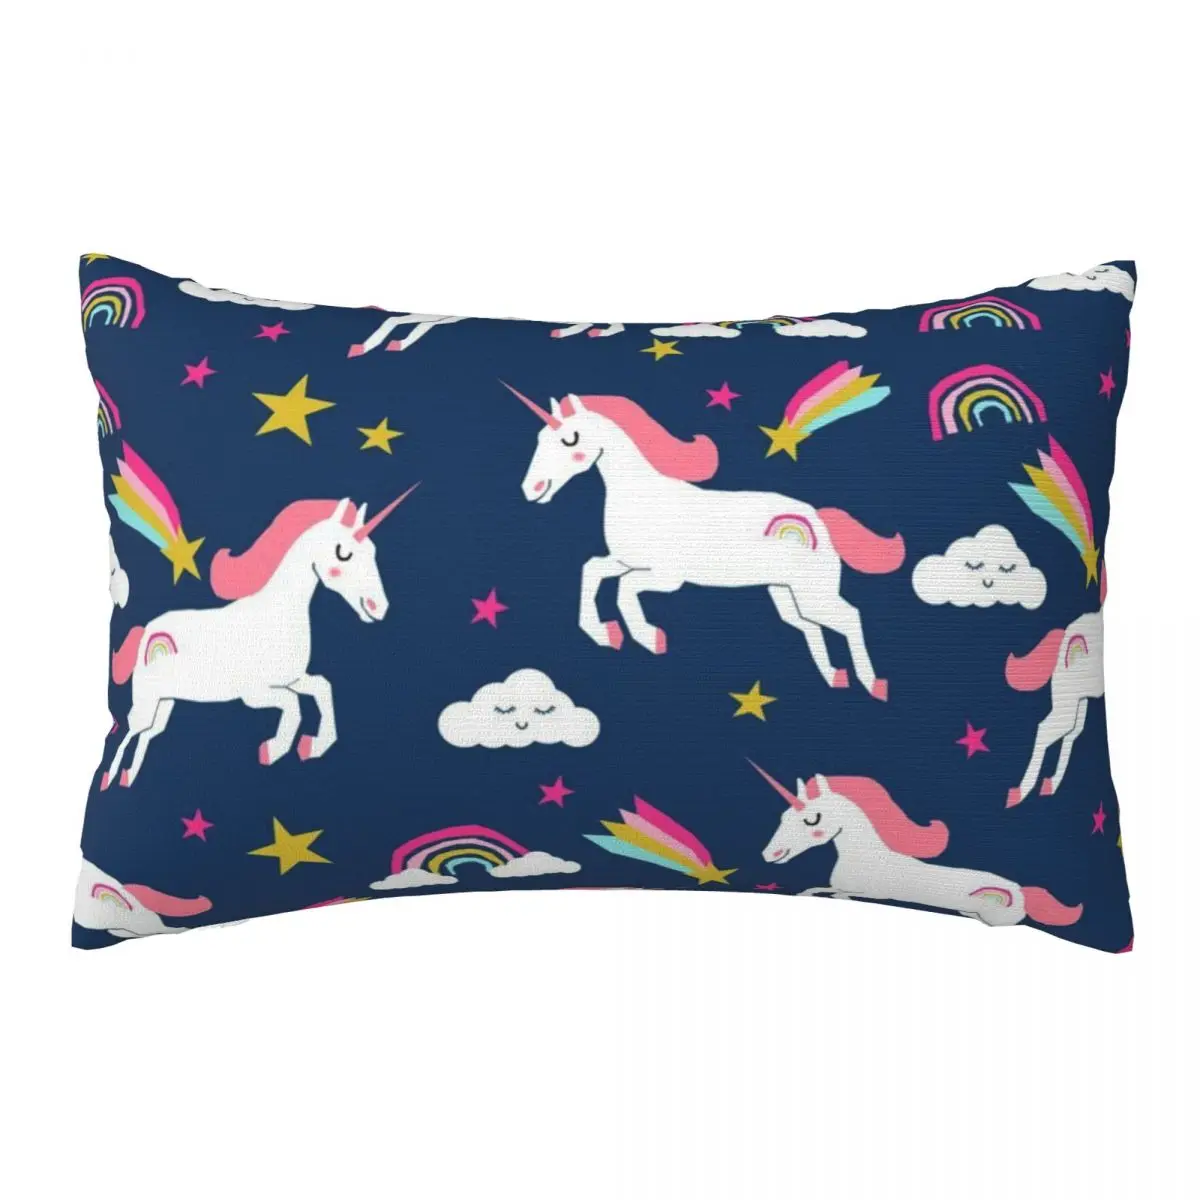 

Rainbow Unicorn Decorative Pillow Covers Throw Pillow Cover Home Pillows Shells Cushion Cover Zippered Pillowcase